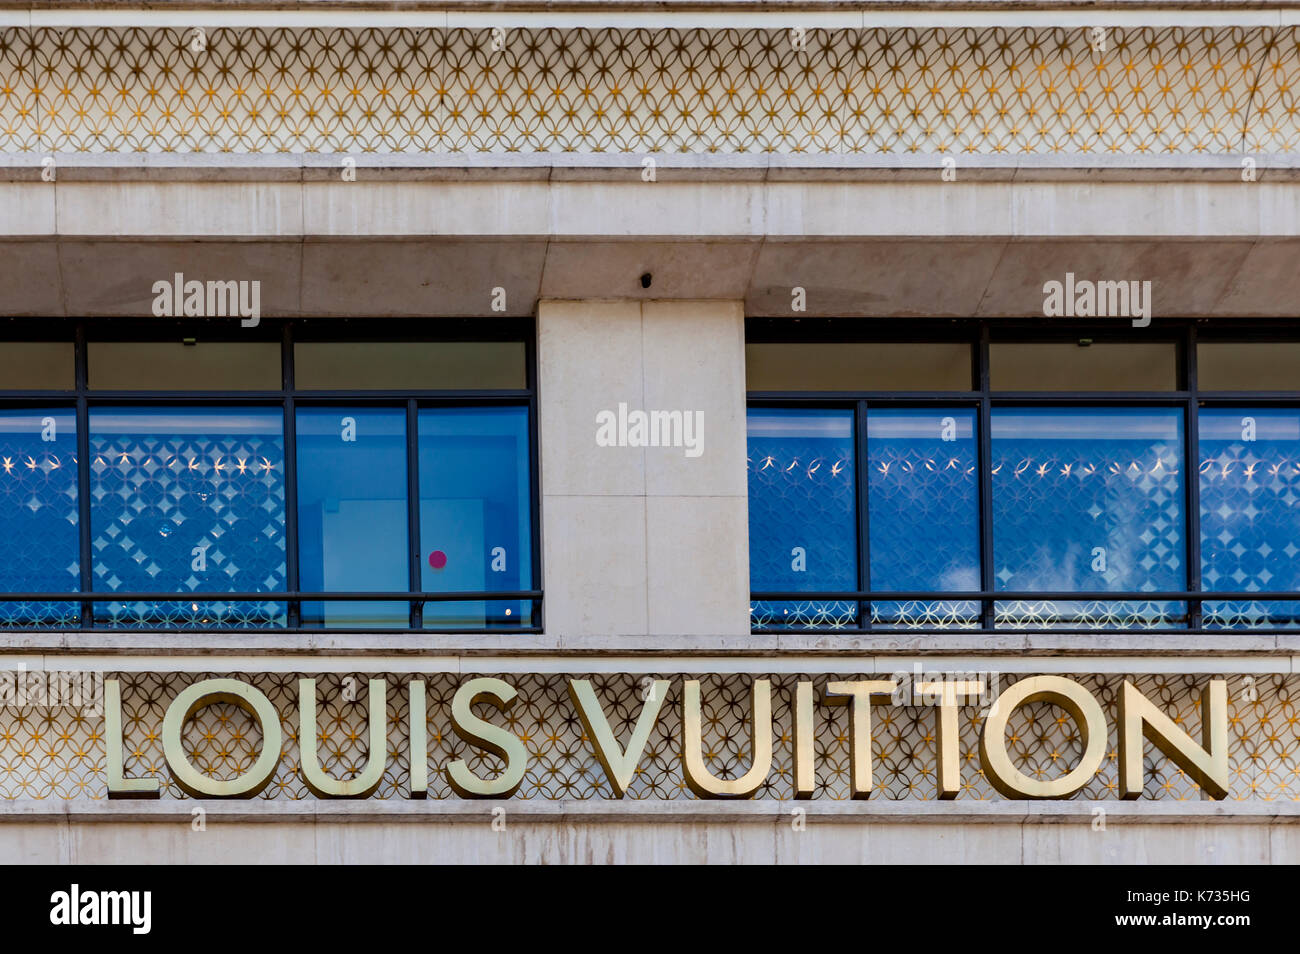 Printable Photo Louis Vuitton Store in Paris Black and White 